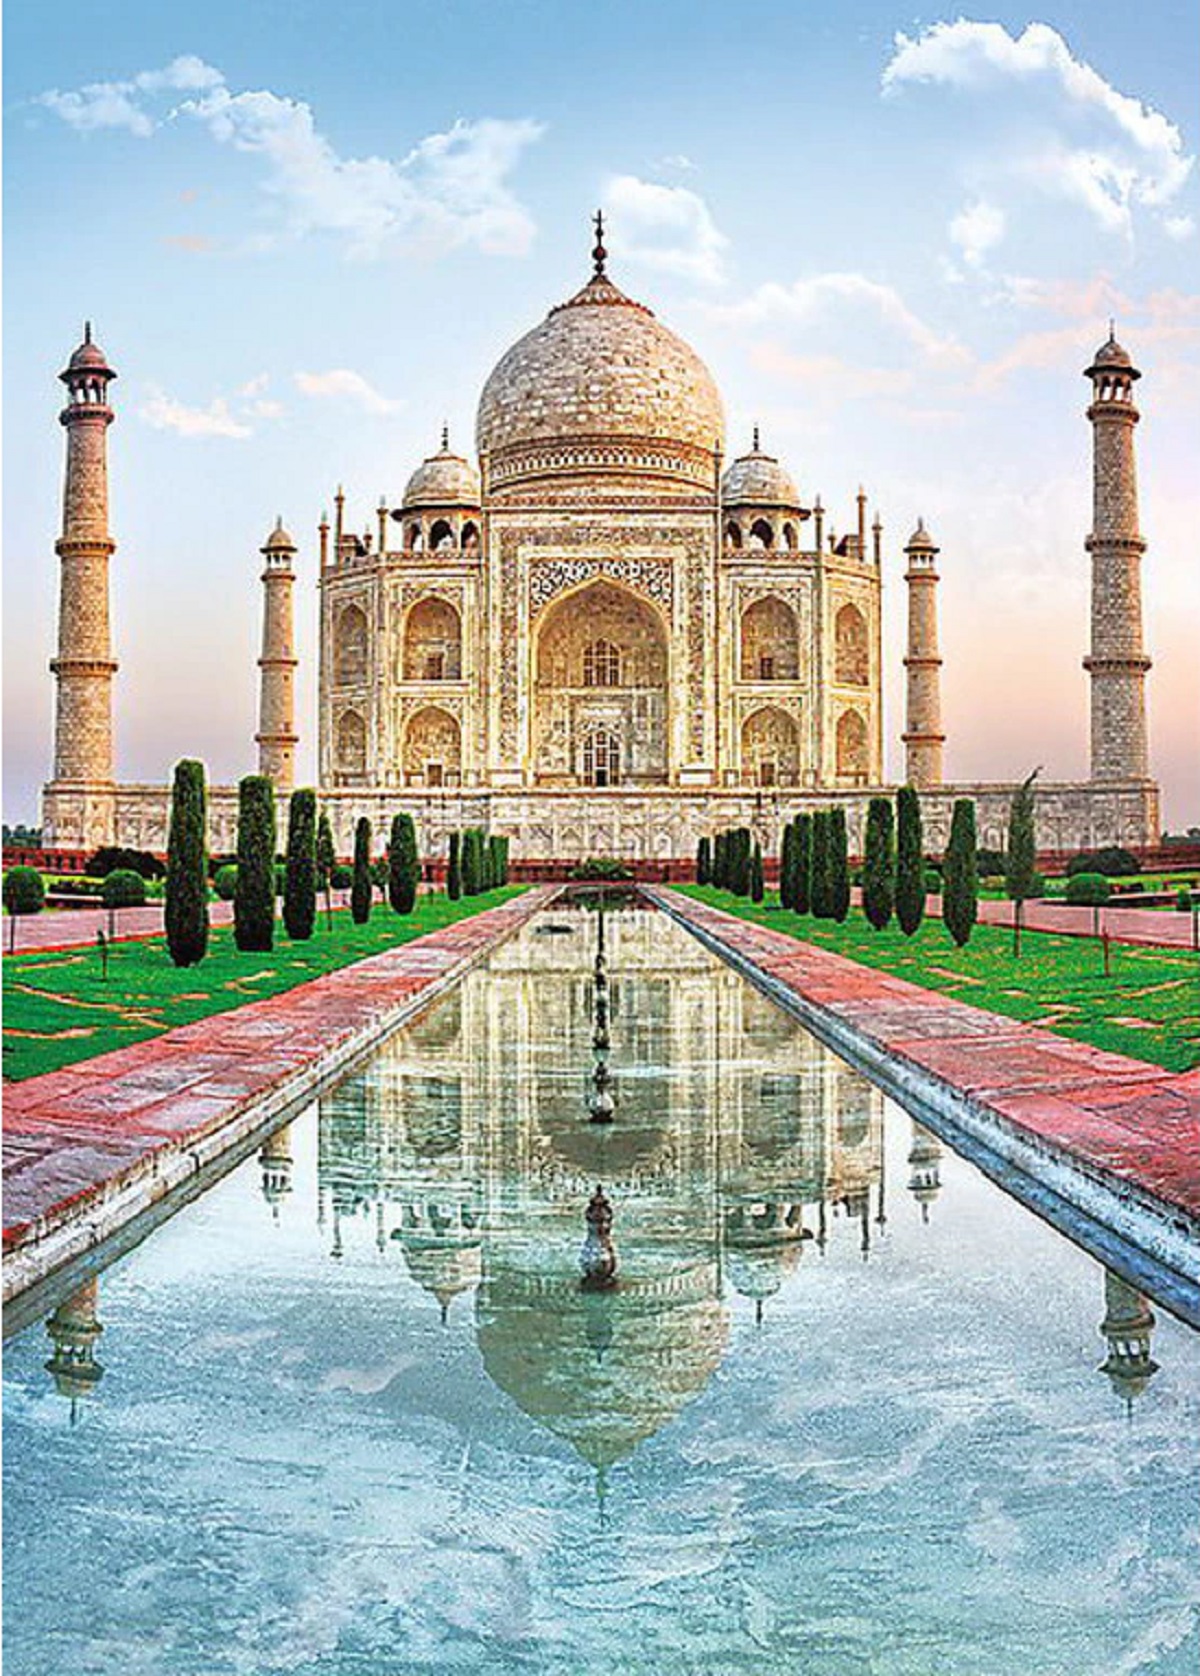 Puzzle 500. Taj Mahal